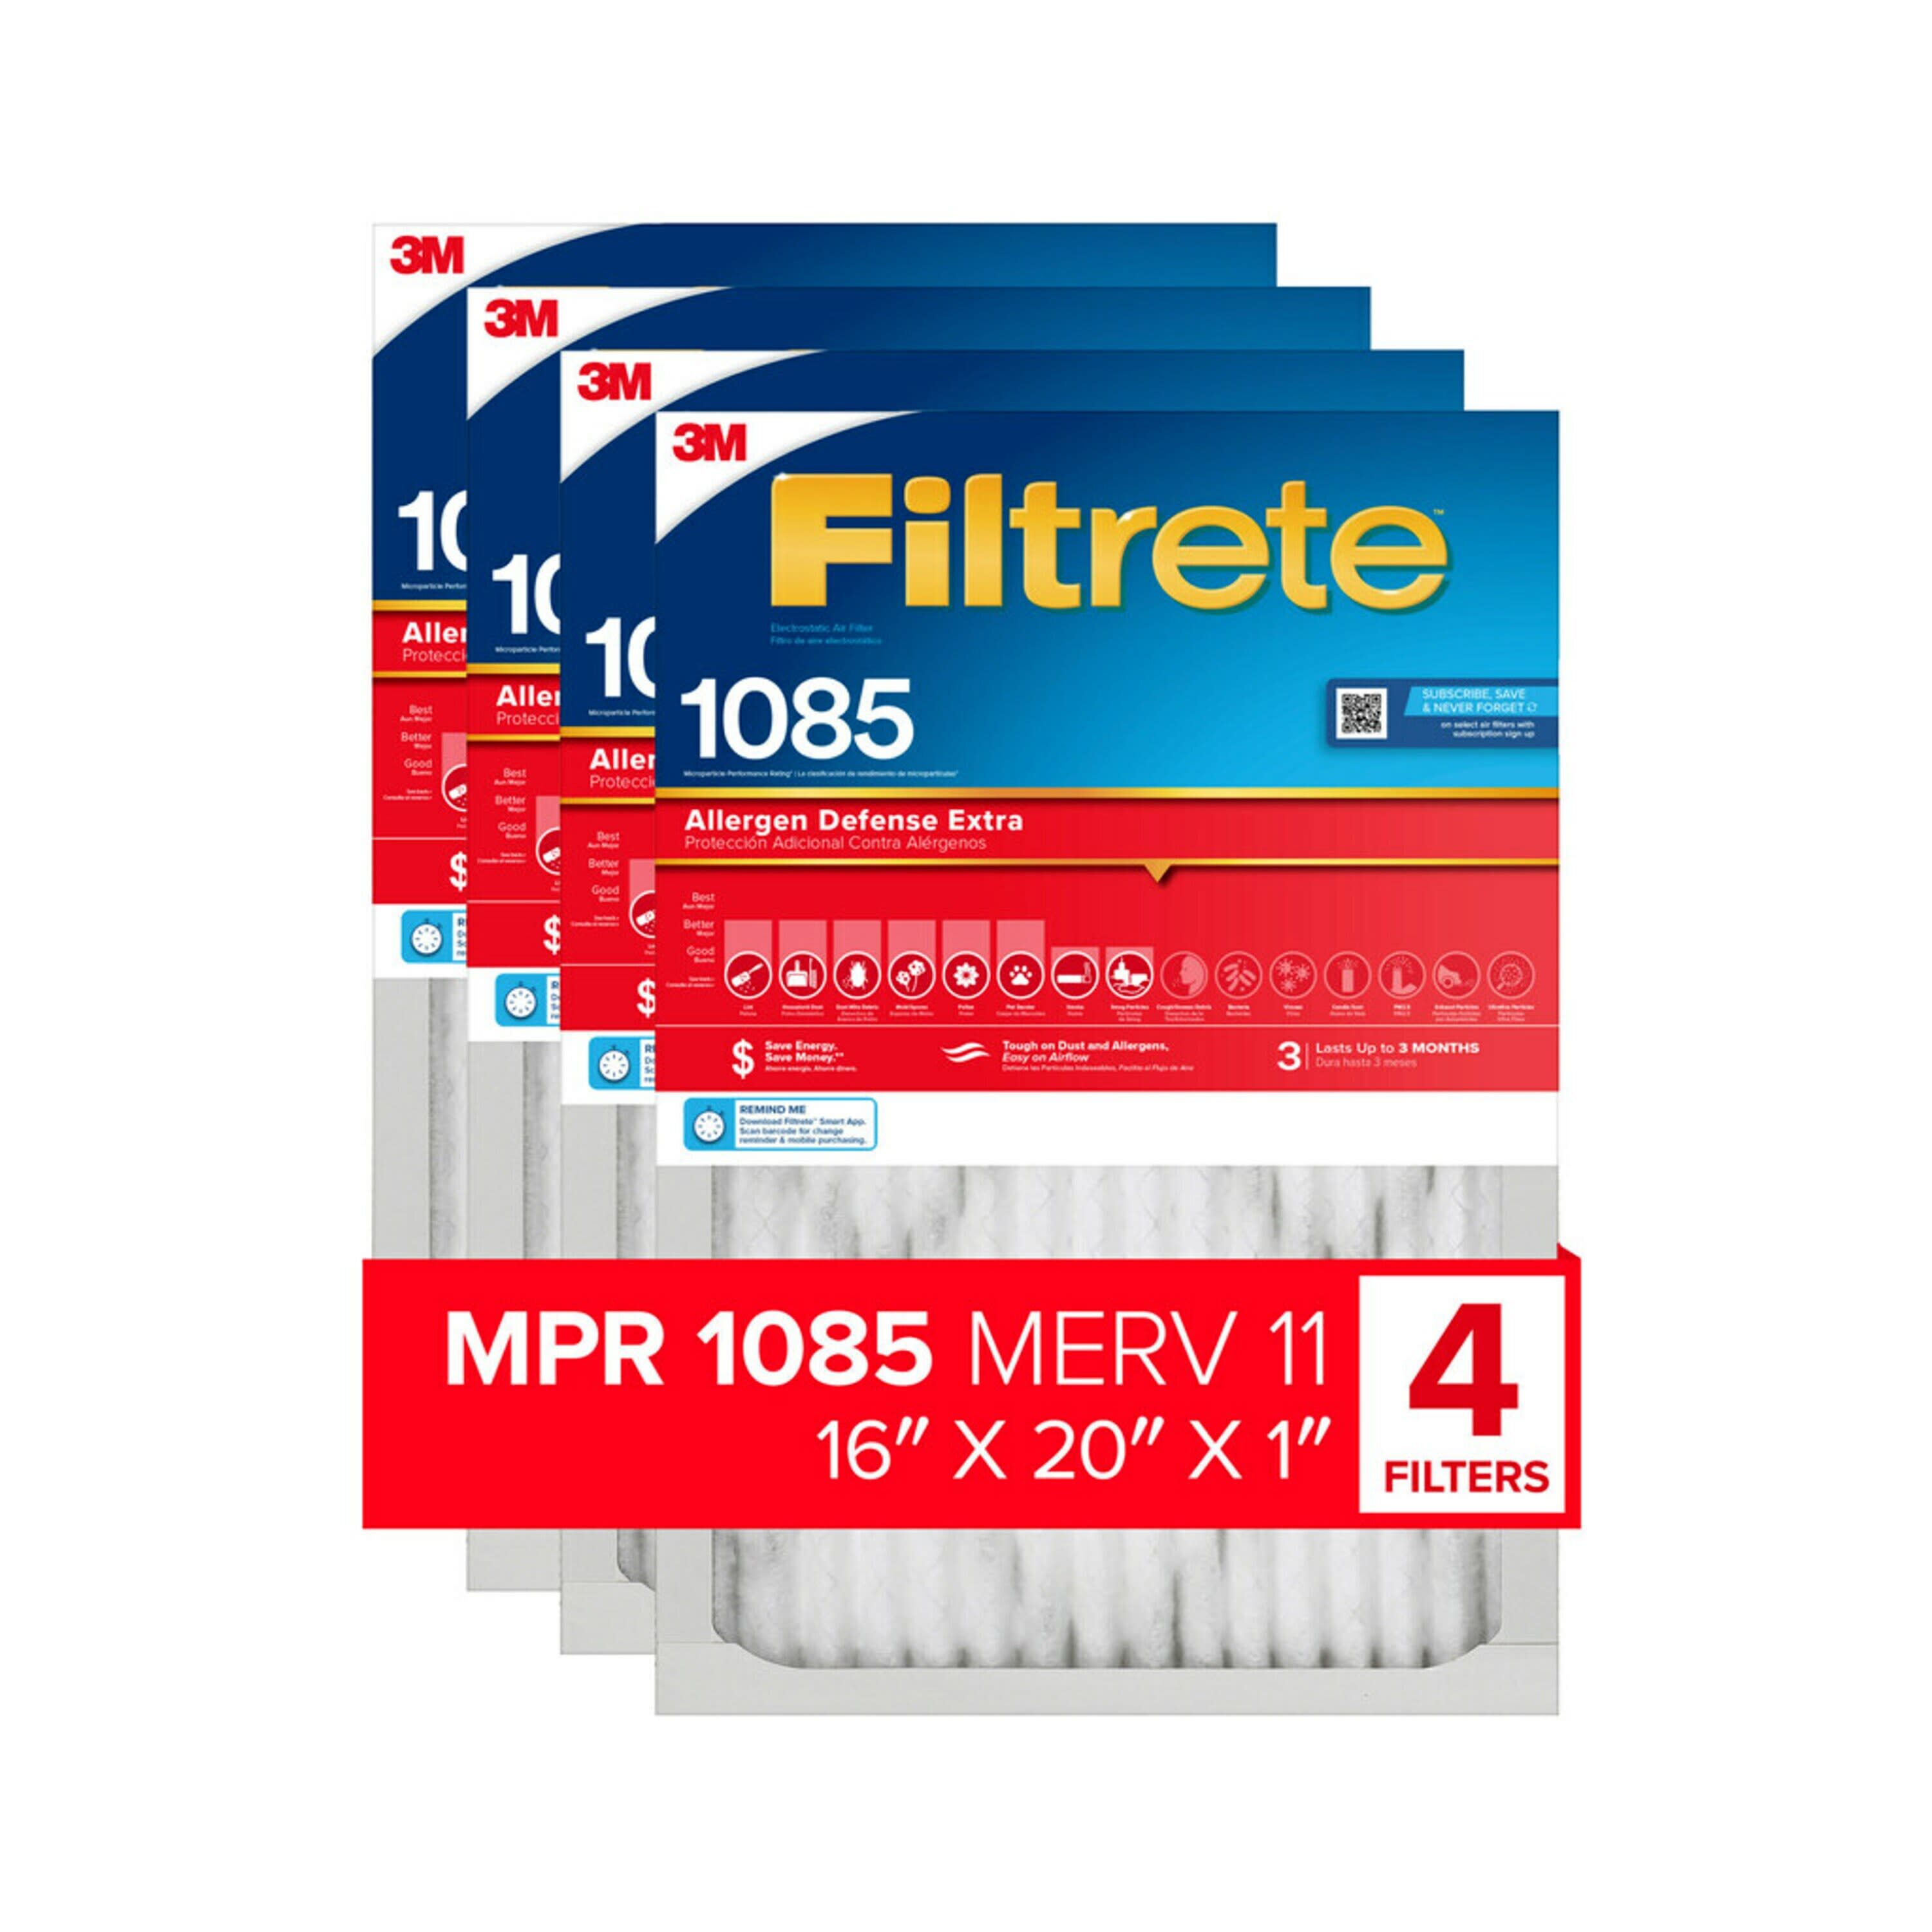 16-in W x 20-in L x 1-in 11 MERV 1085 MPR Allergen Defense Extra Electrostatic Pleated Air Filter (4-Pack) | - Filtrete 1200-4